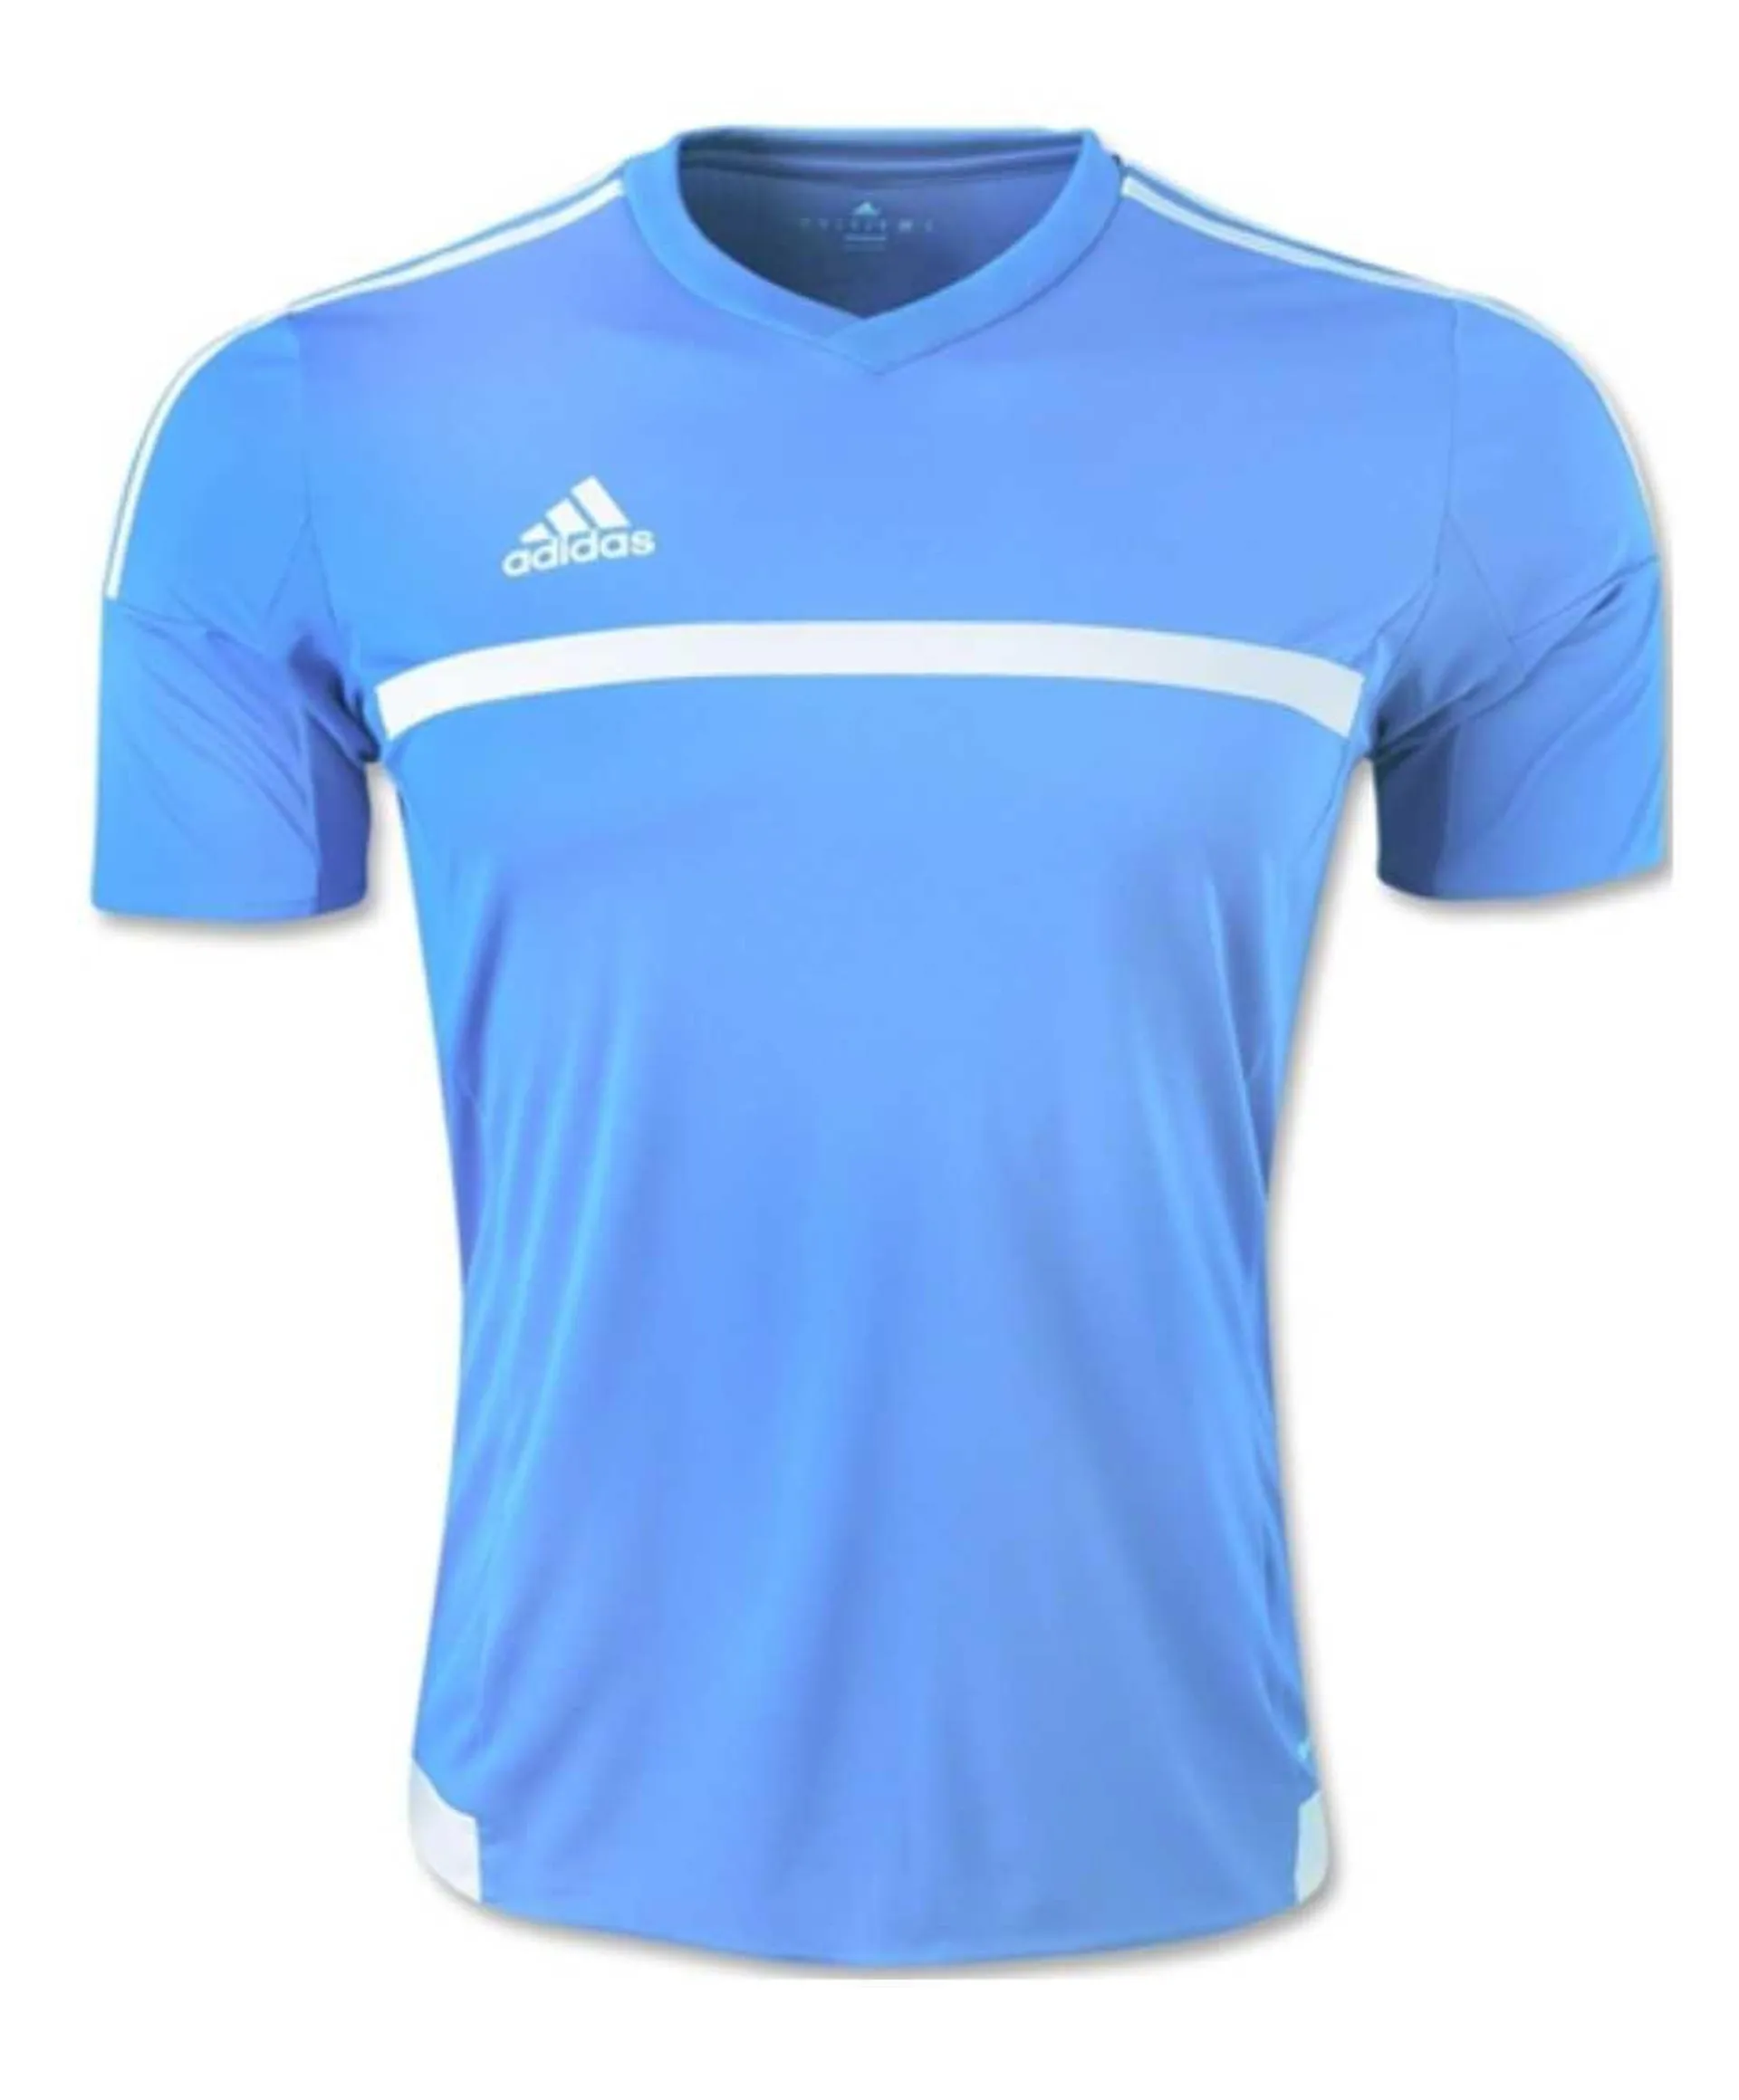 Adidas Boys MLS 15 Match Jersey T-Shirt Sky Blue/White Size Youth